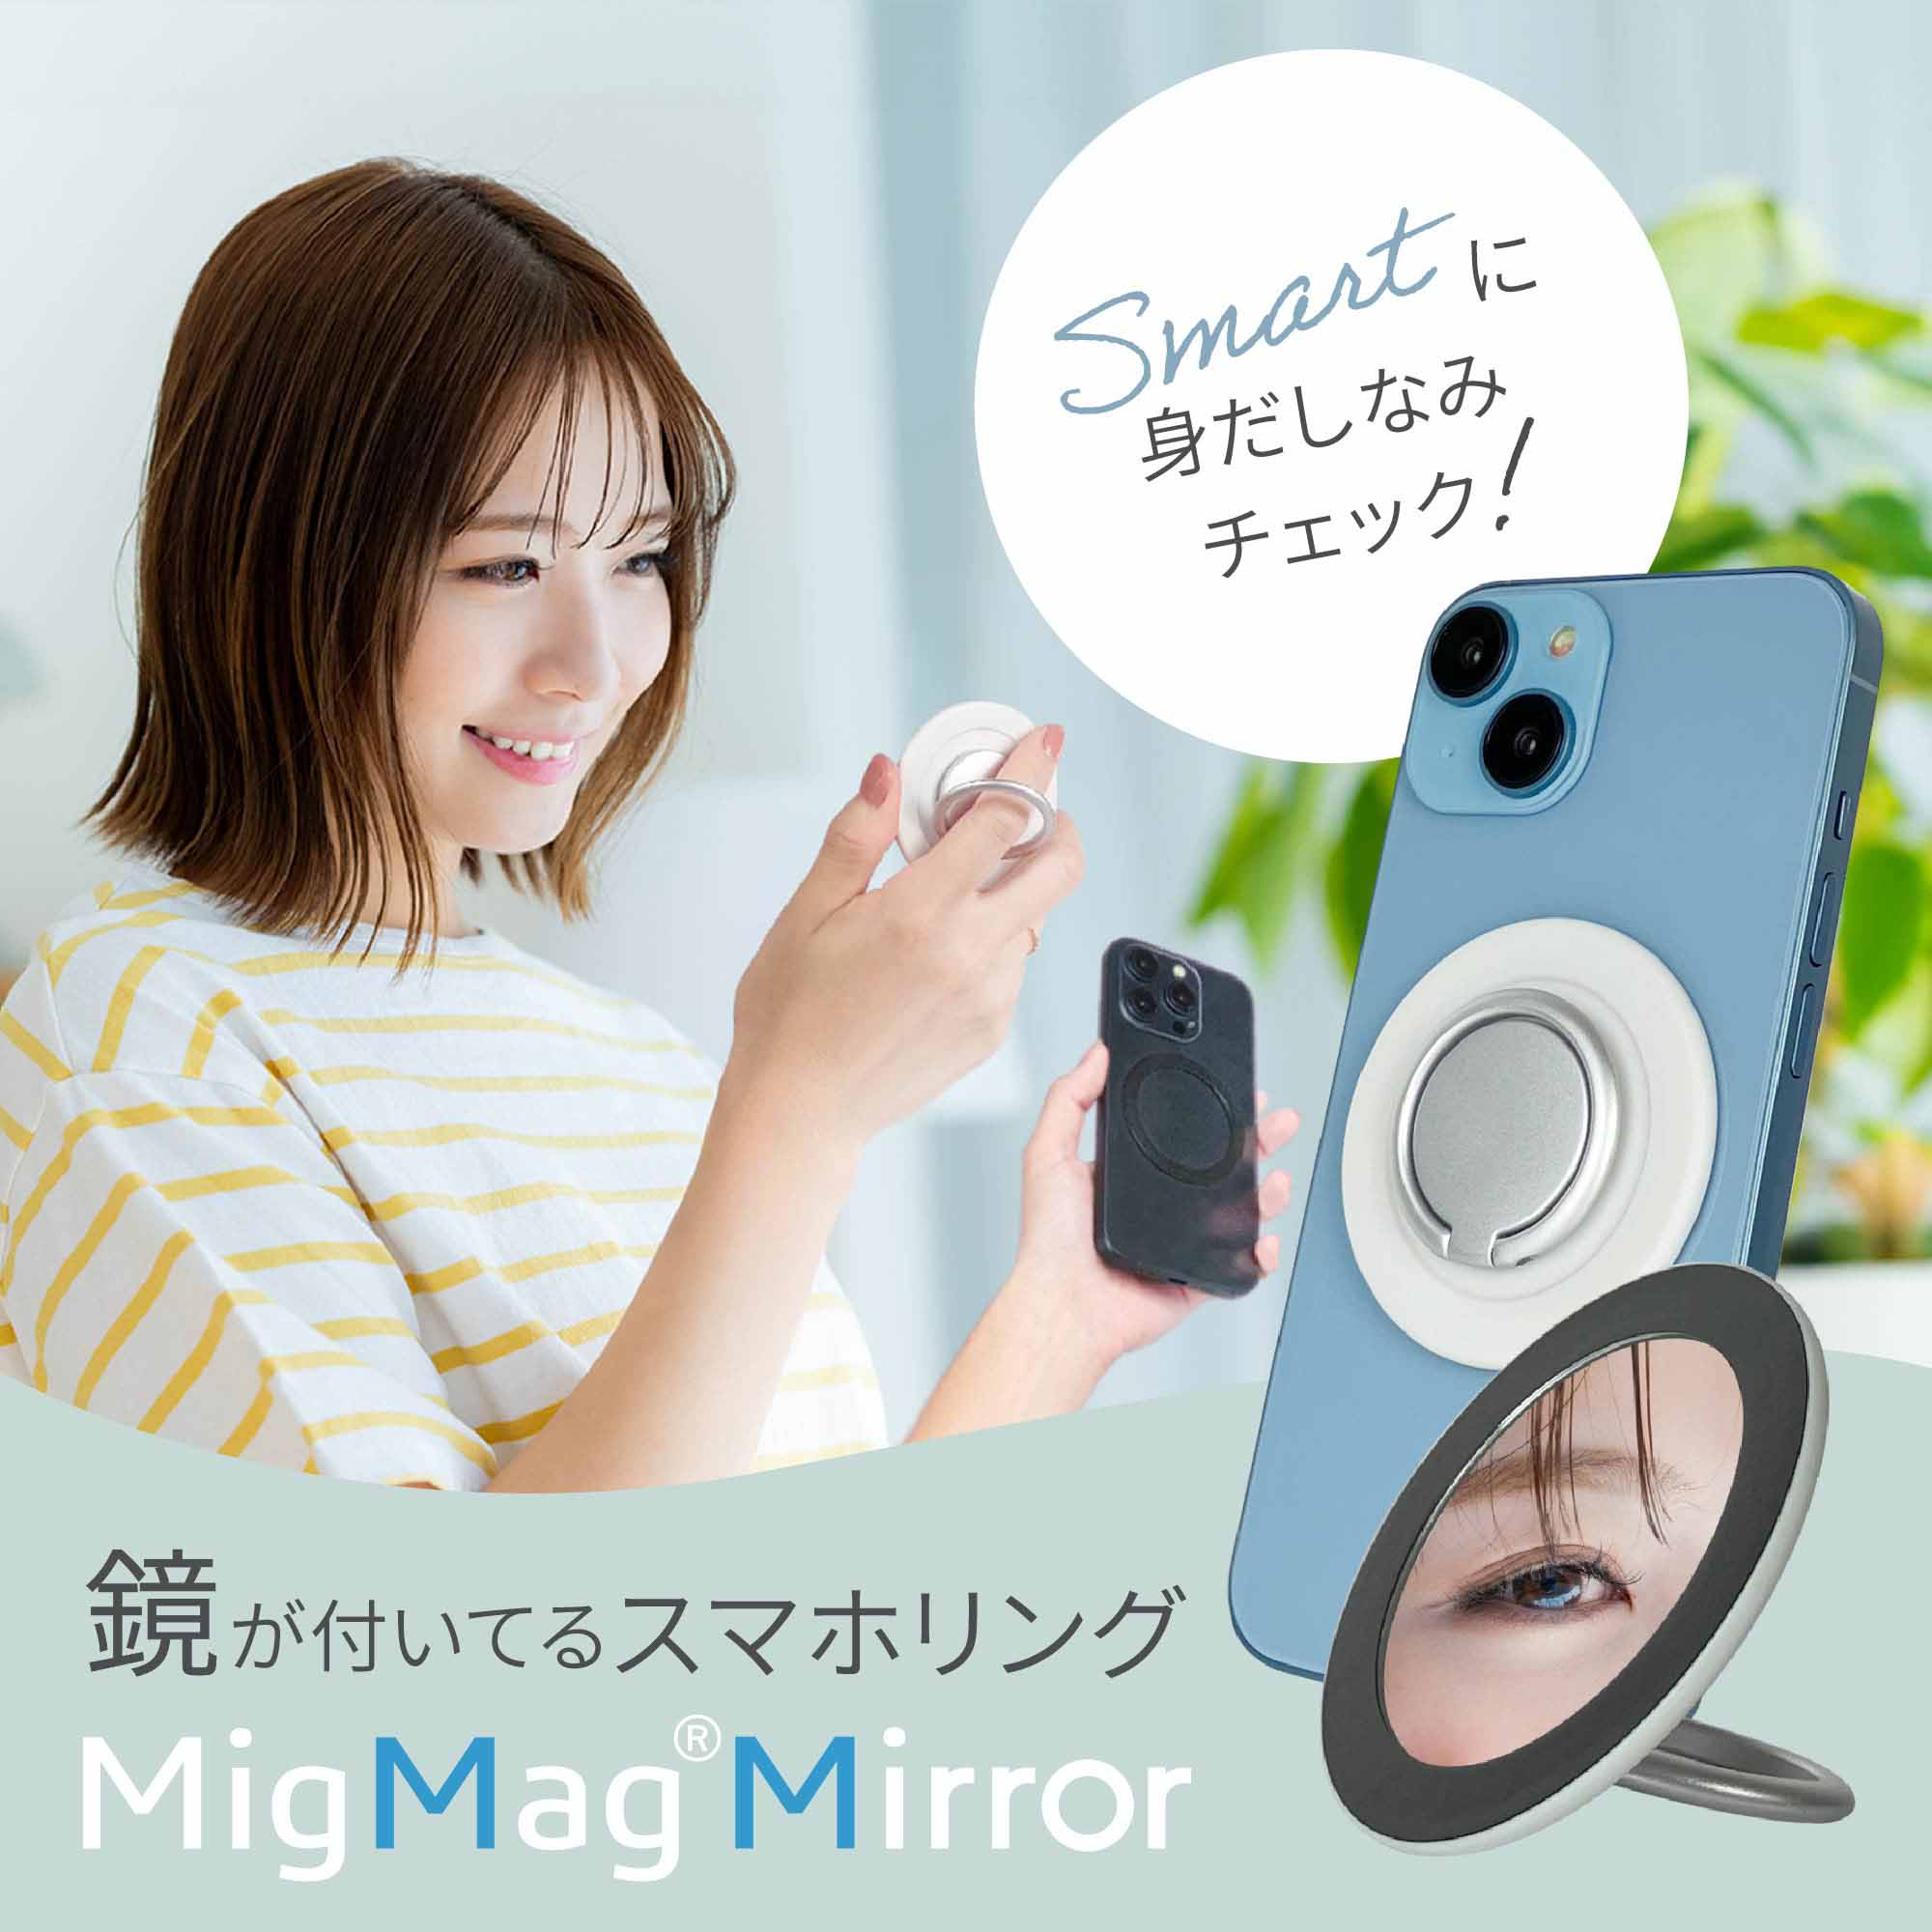 MigMag Mirror (ミグマグミラー)